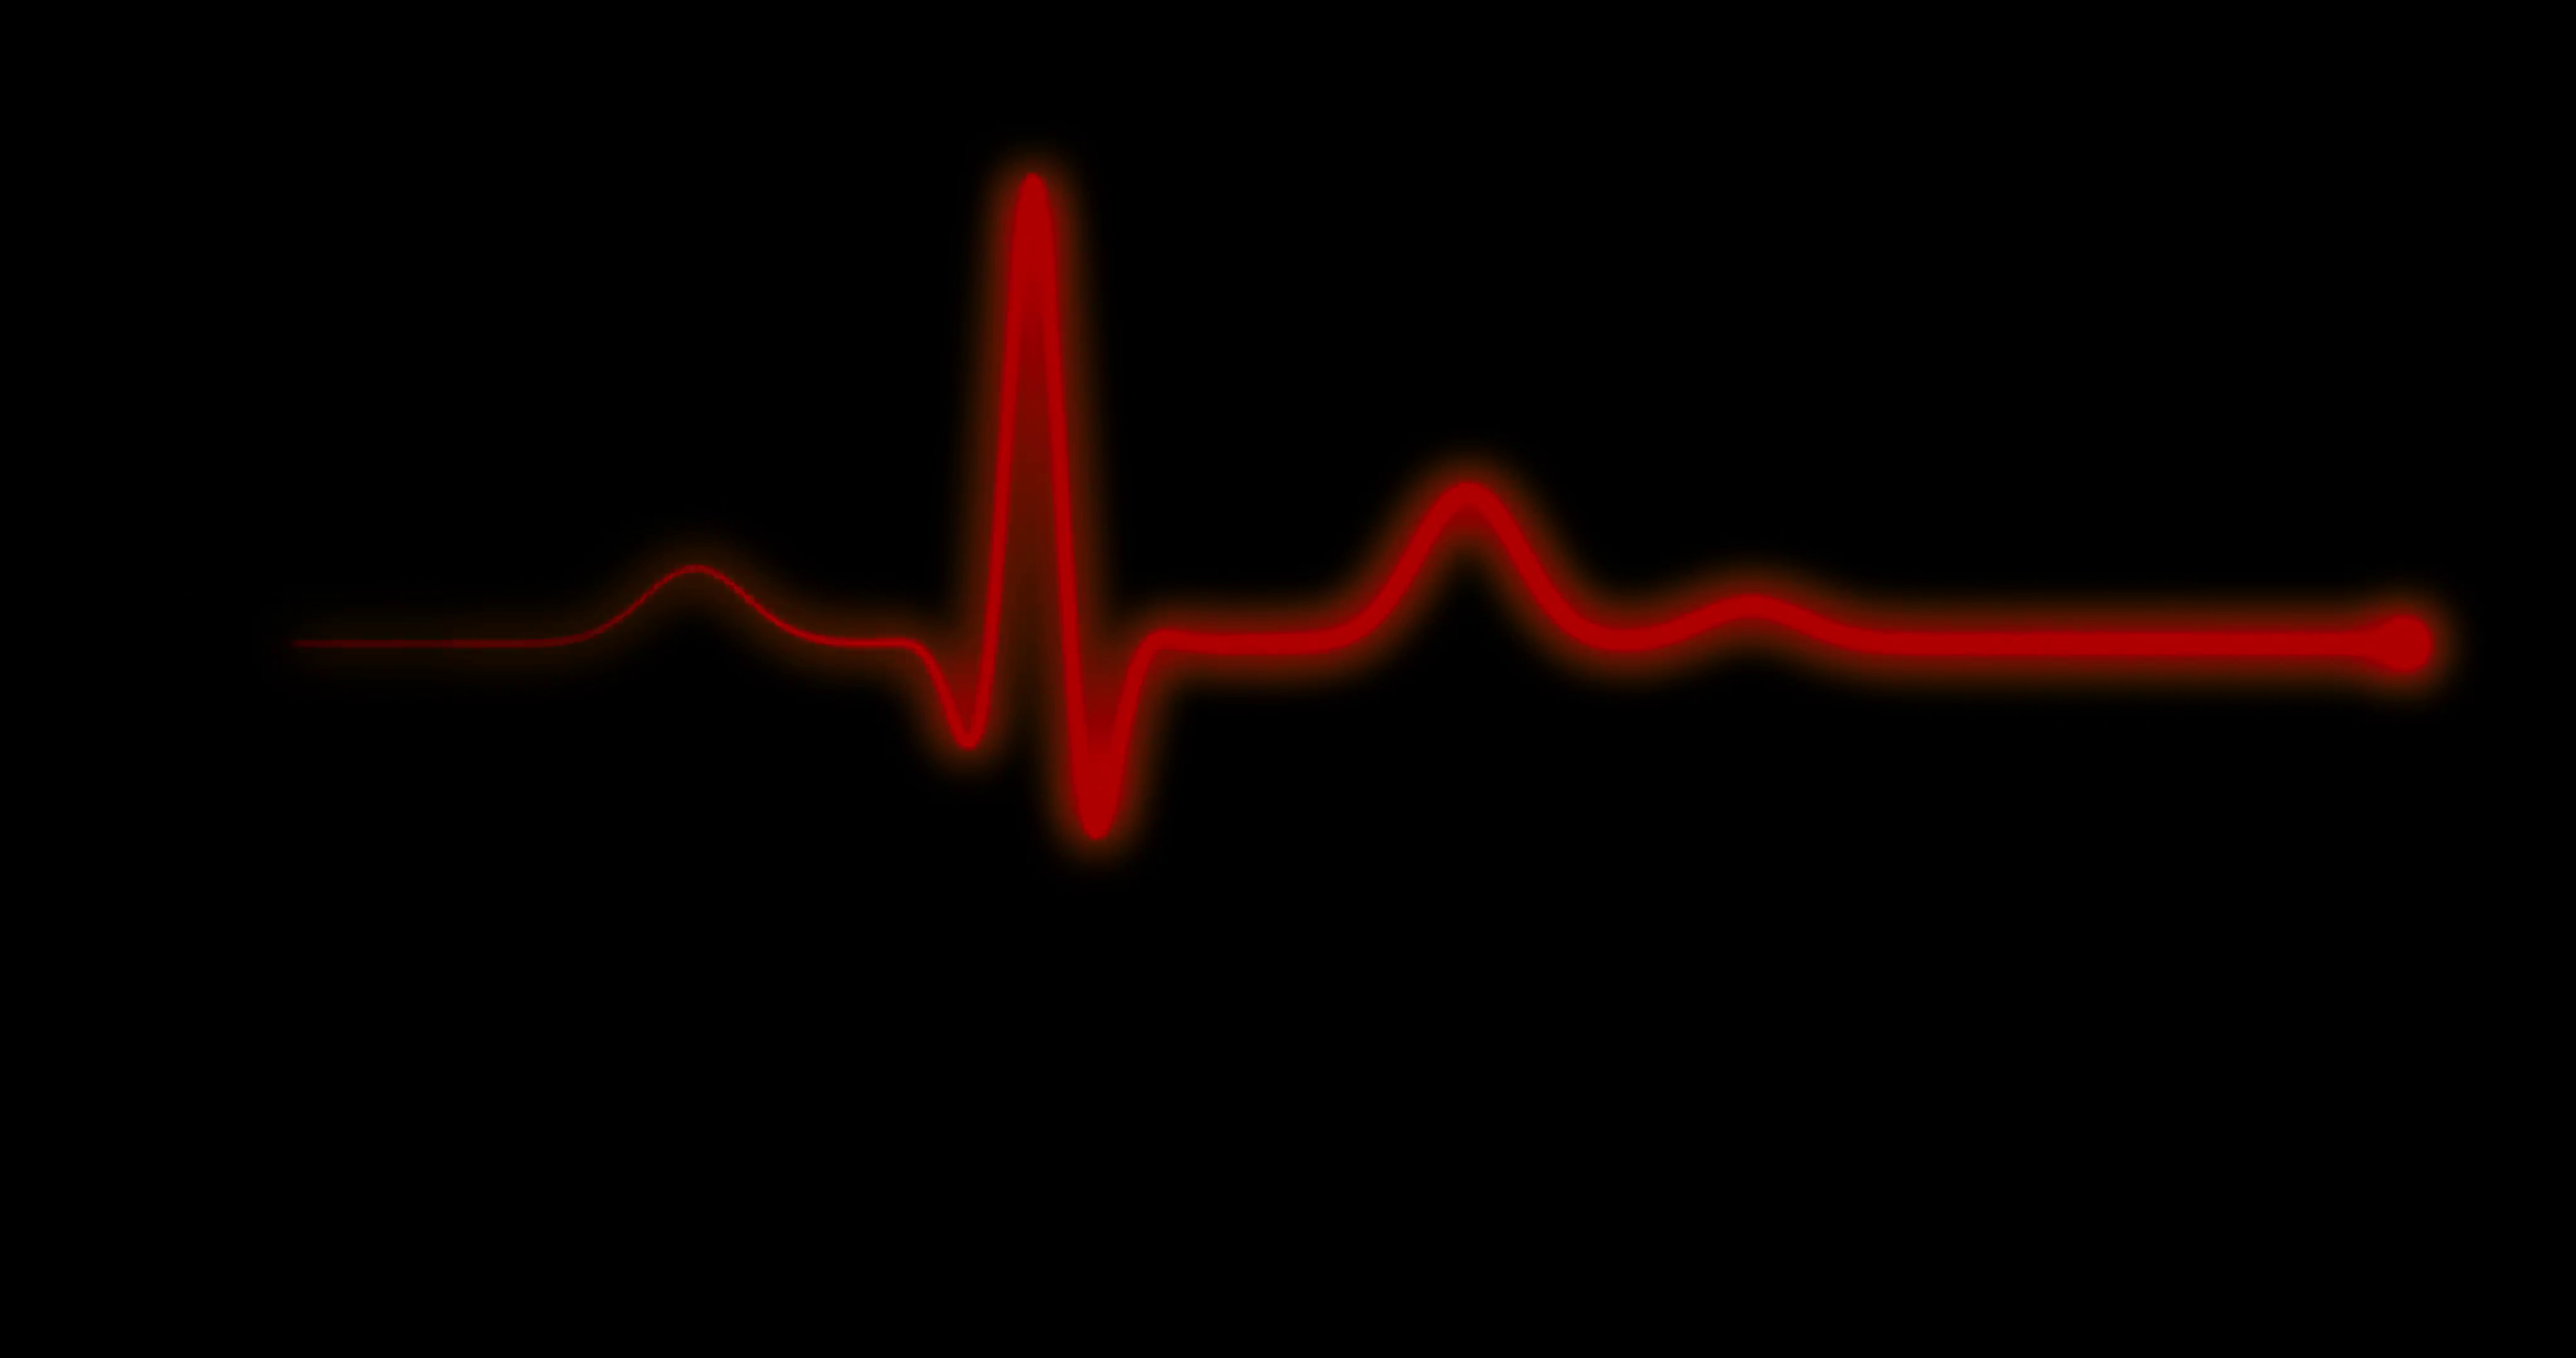 Пульс остановился. Кардиограмма остановки сердца. Остановка сердца на ЭКГ. Пульс остановка сердца. ЭКГ на черном фоне.